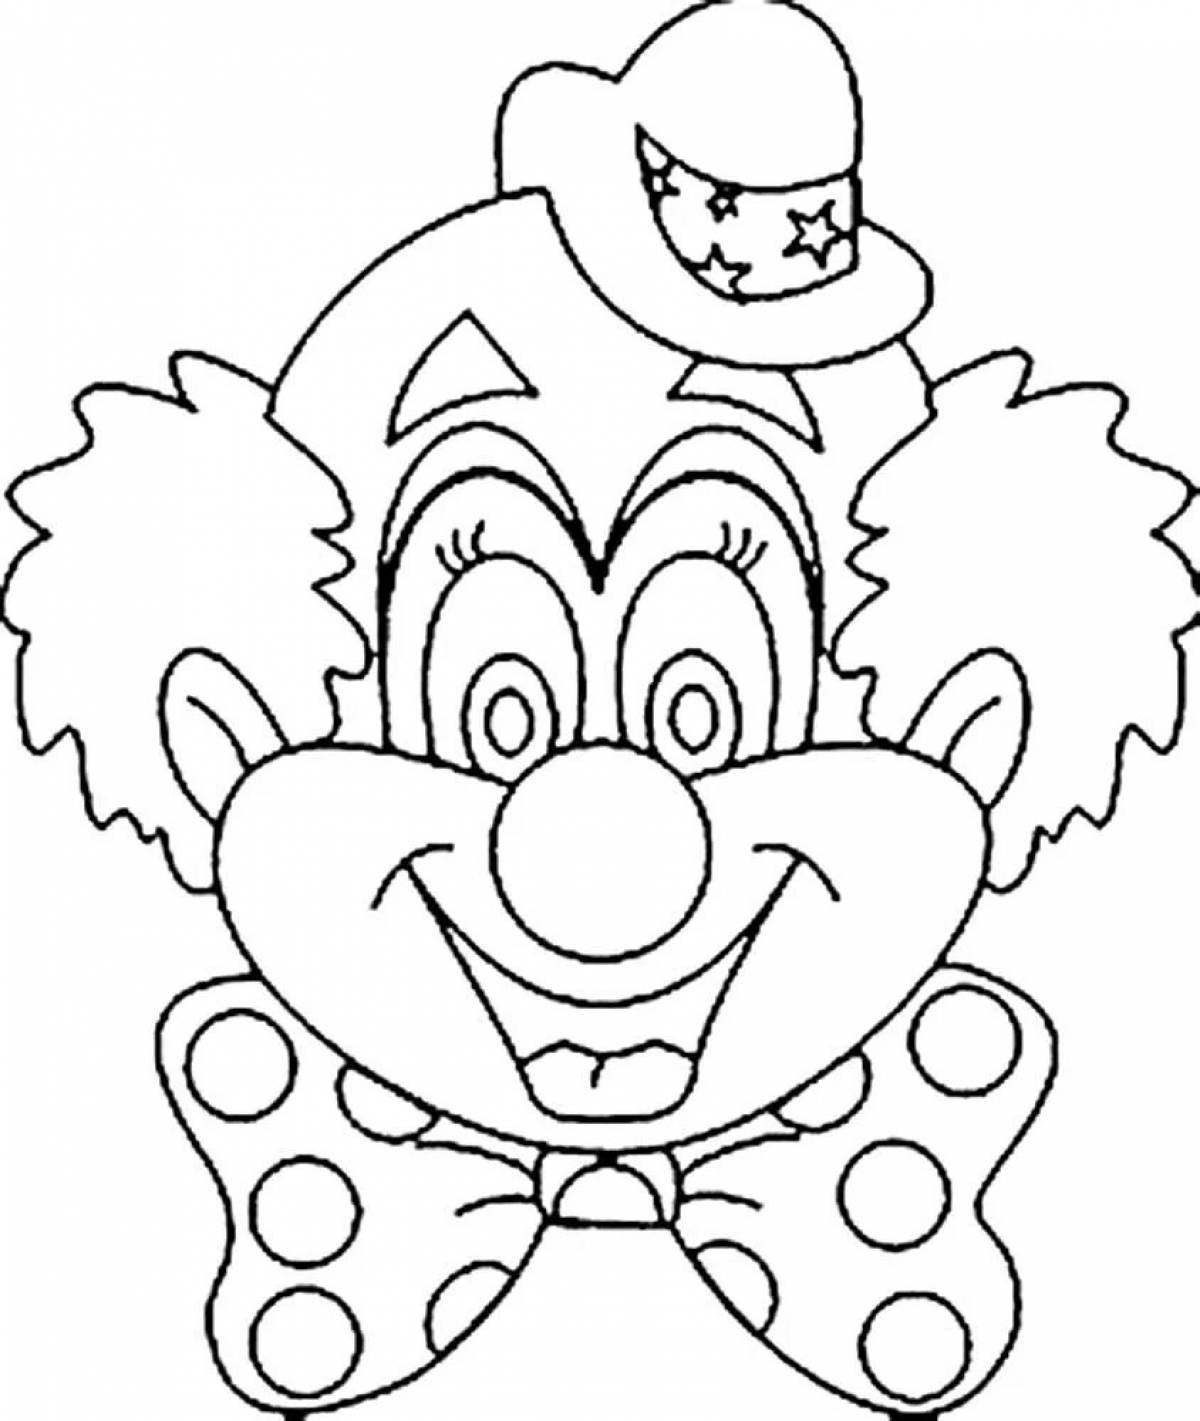 Шаблон клоуна для аппликации для детей. Клоун раскраска. Лицо клоуна раскраска. Клоун раскраска для детей. Маска клоун раскраска для детей.